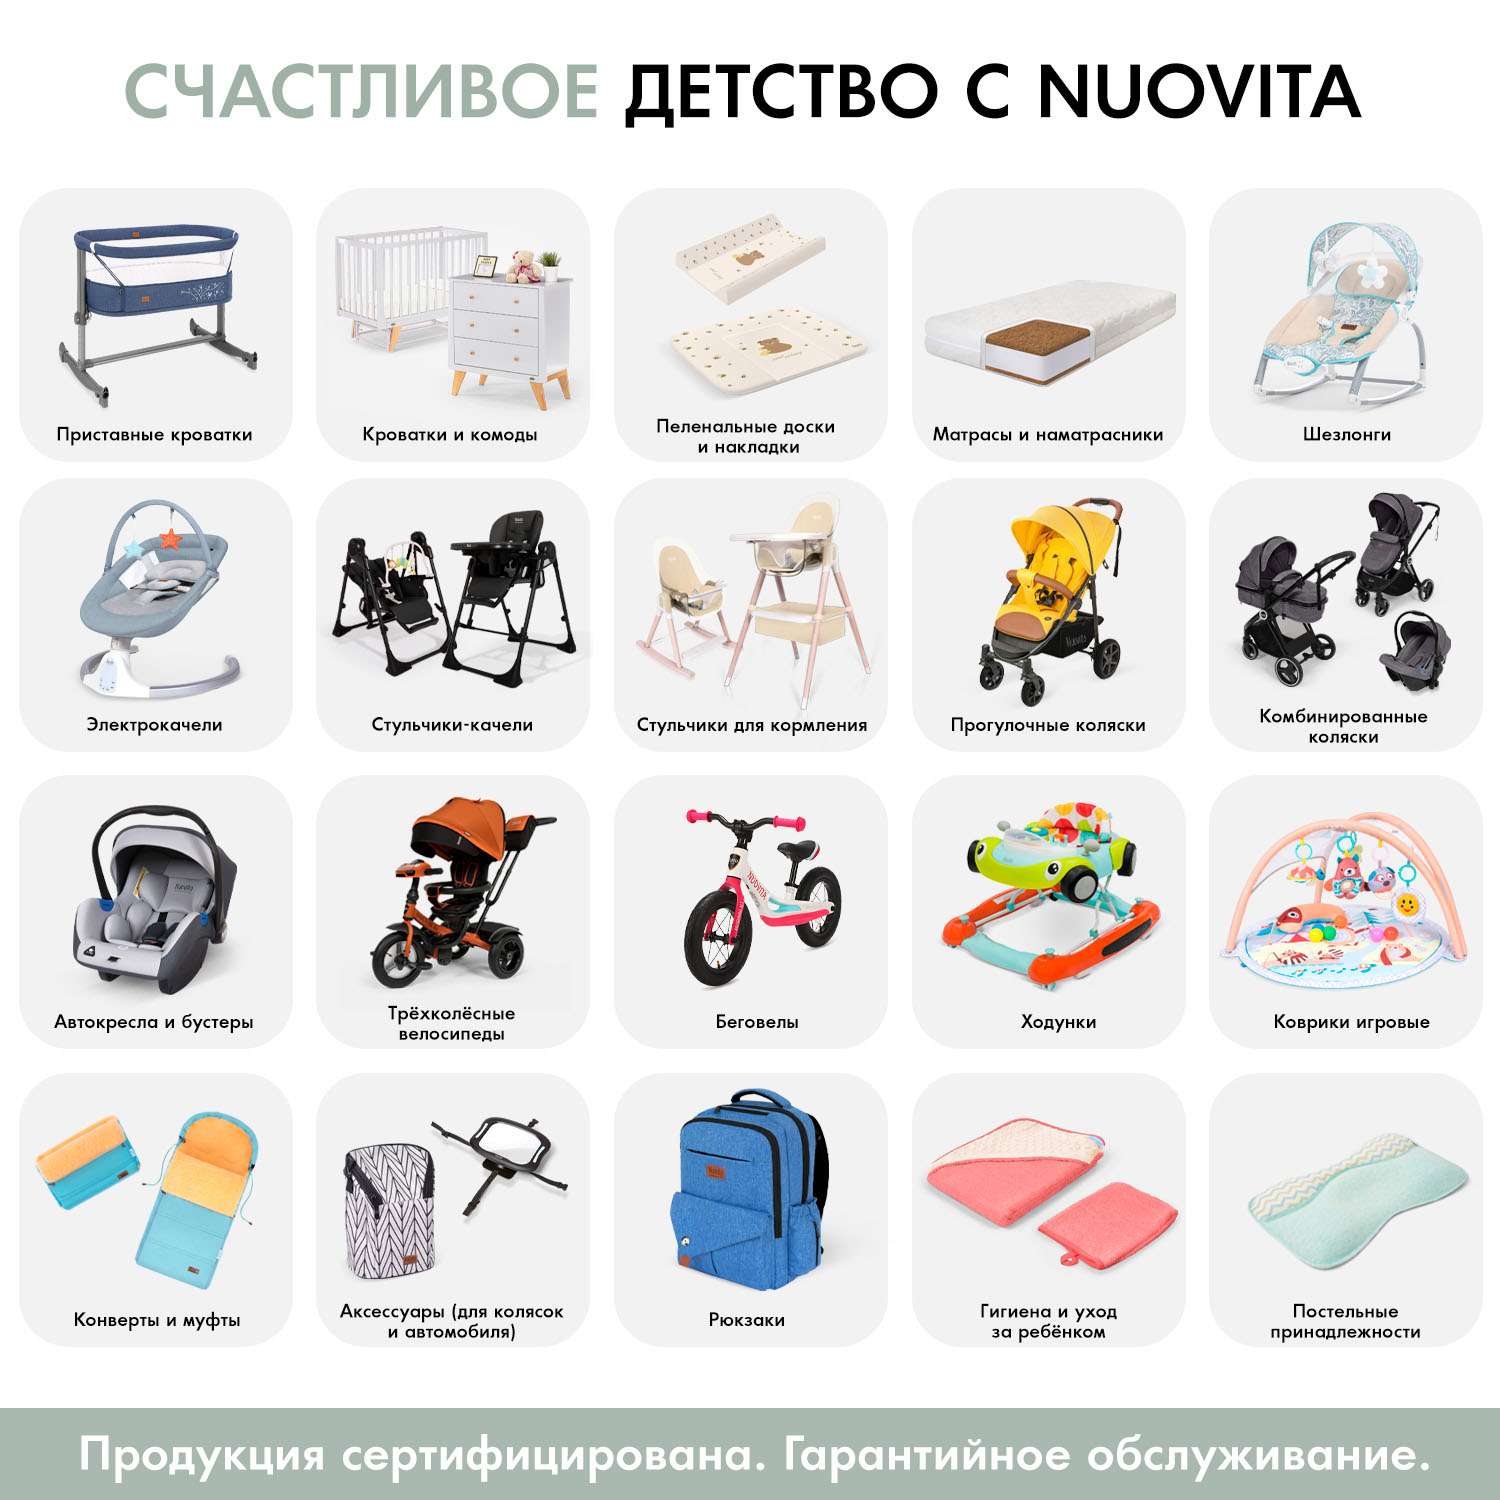 Подушка для новорожденного Nuovita NEONUTTI Cuore Memoria кремовый - фото 12